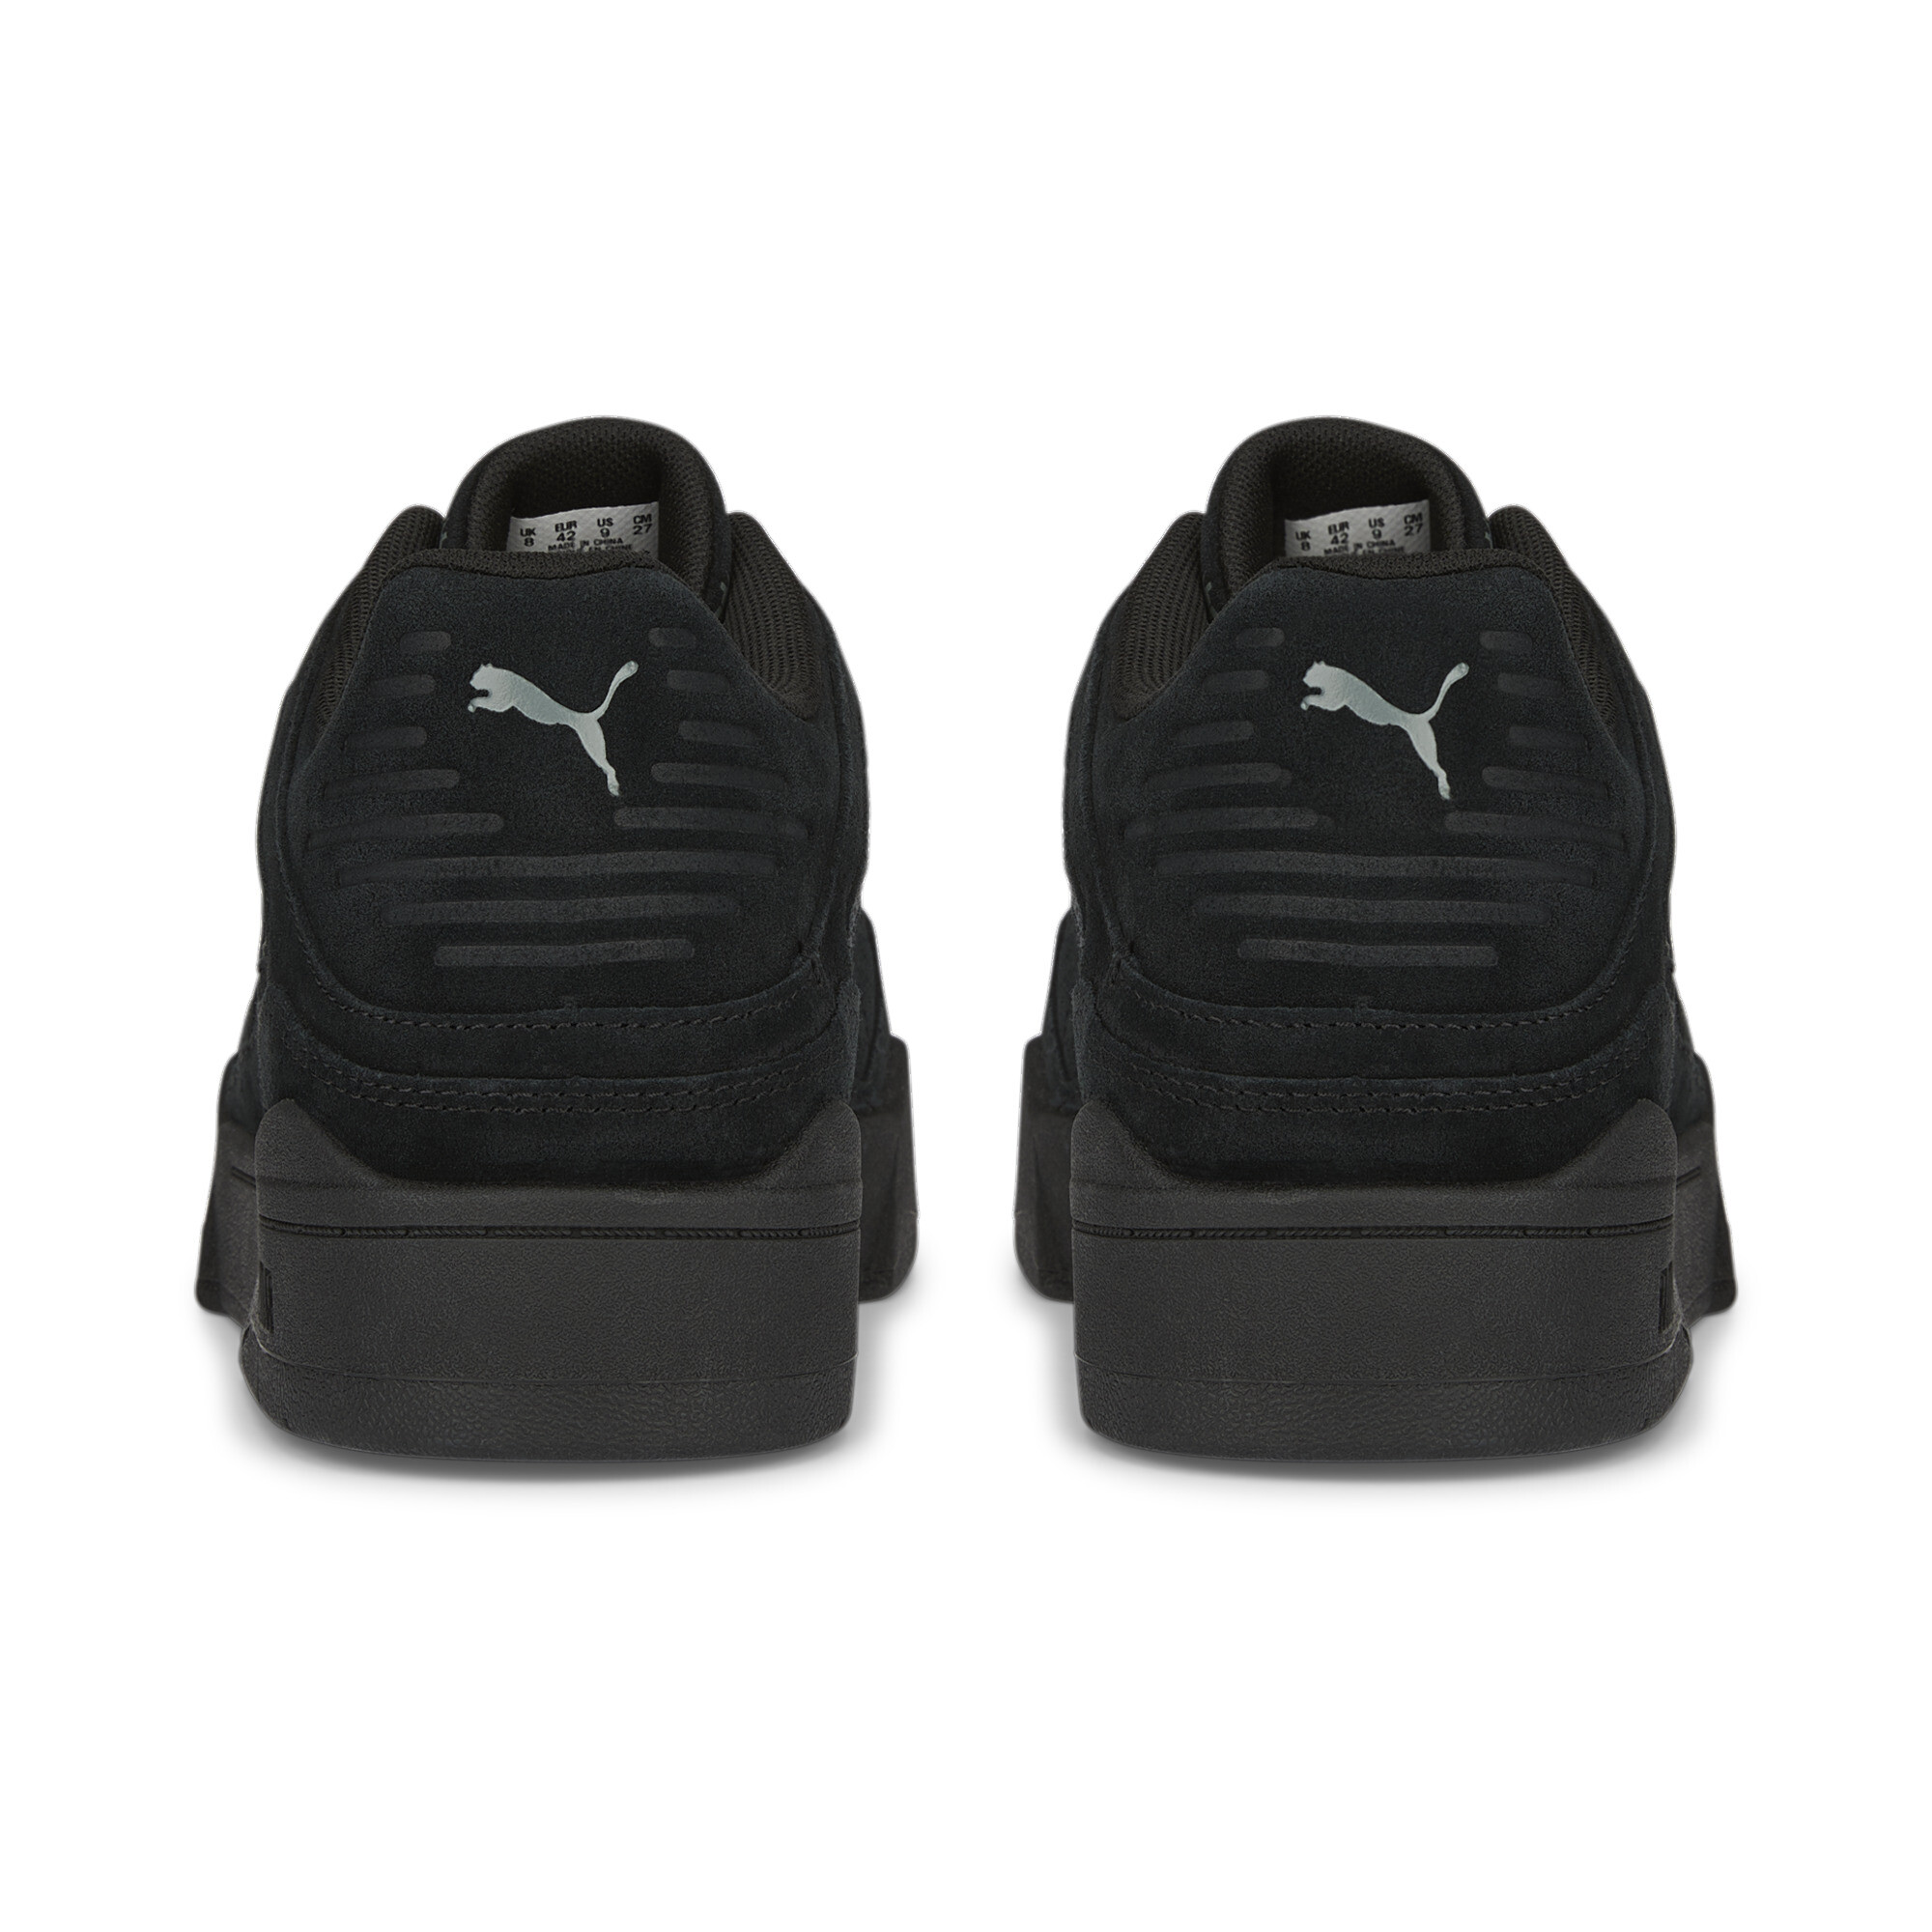 Men's PUMA Slipstream Trend 7etter Sneakers In Black, Size EU 46